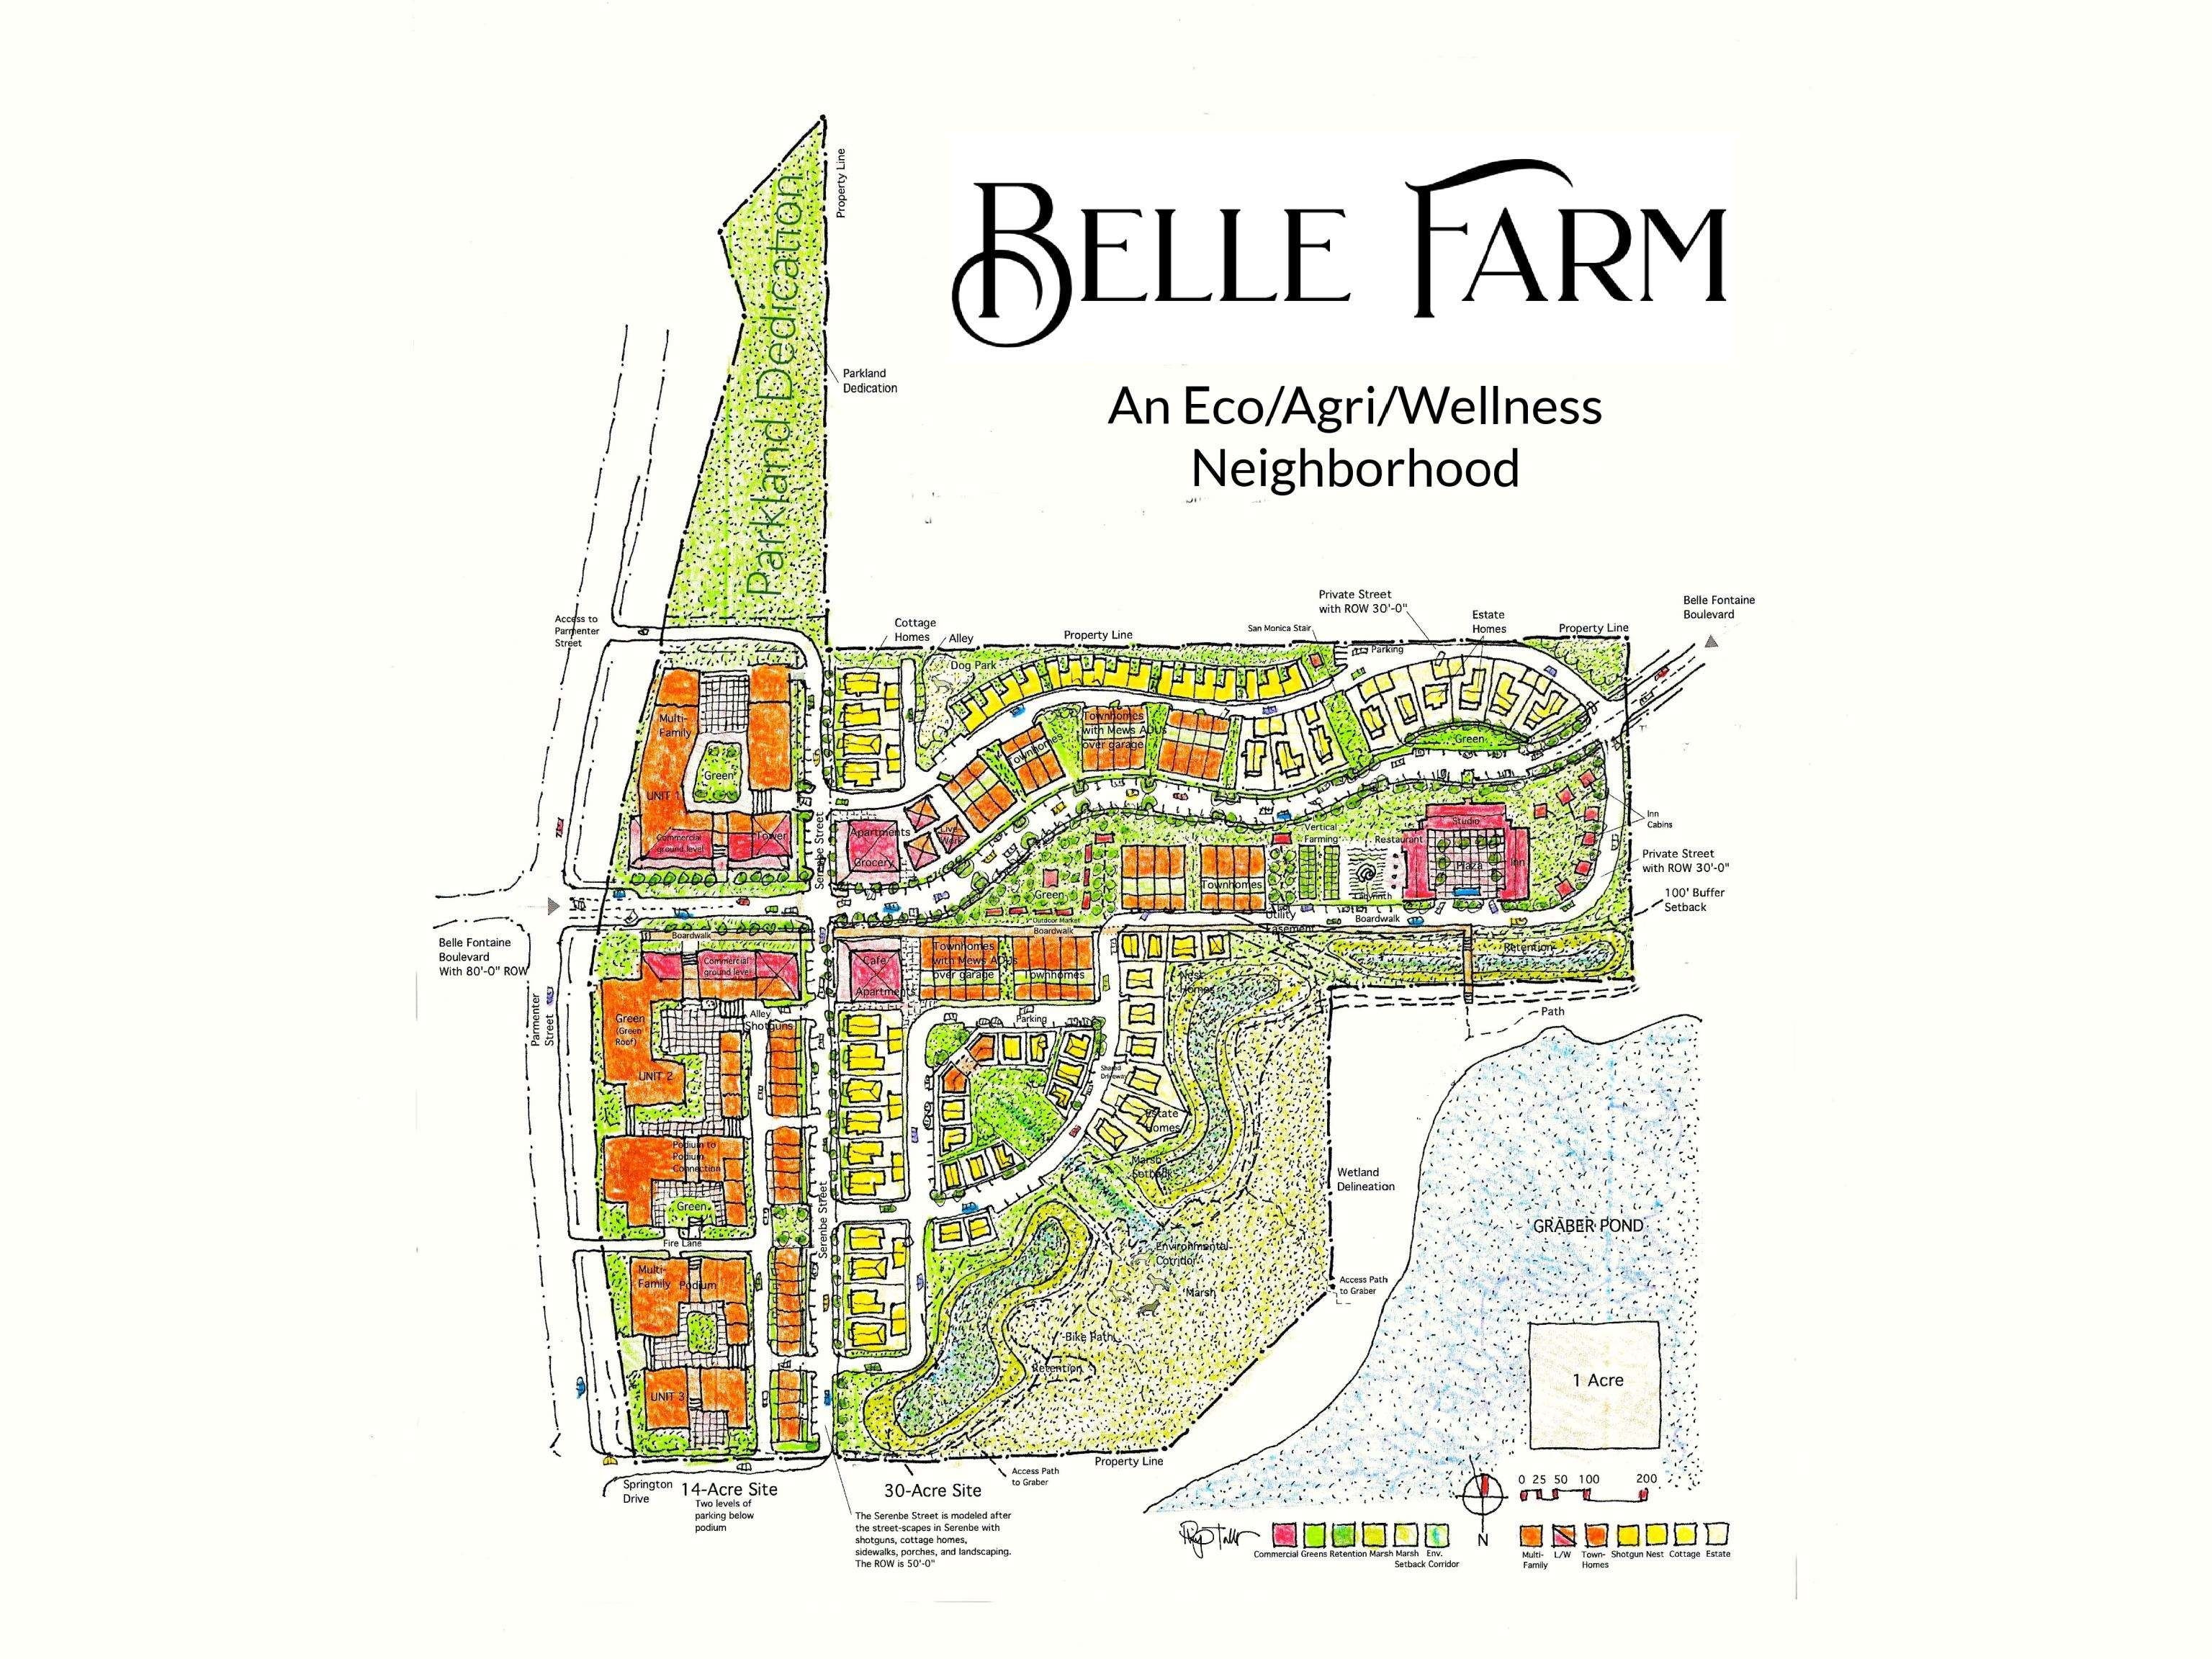 2. Lot 41 Belle Farm